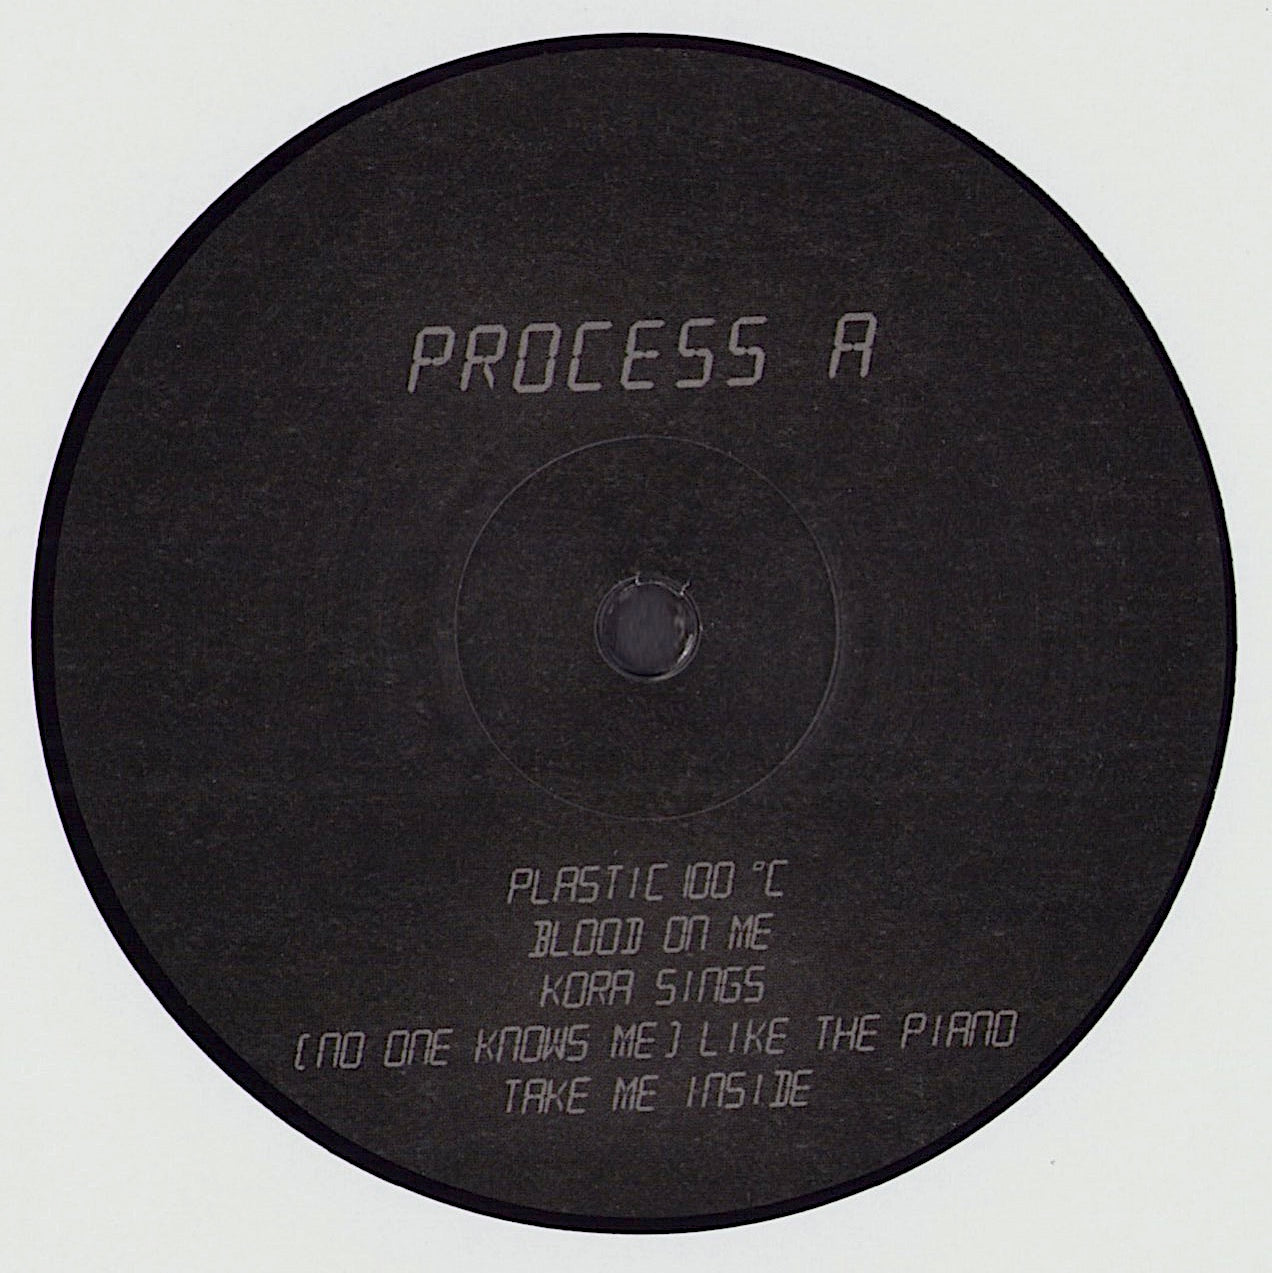 Sampha - Process Vinyl LP + CD